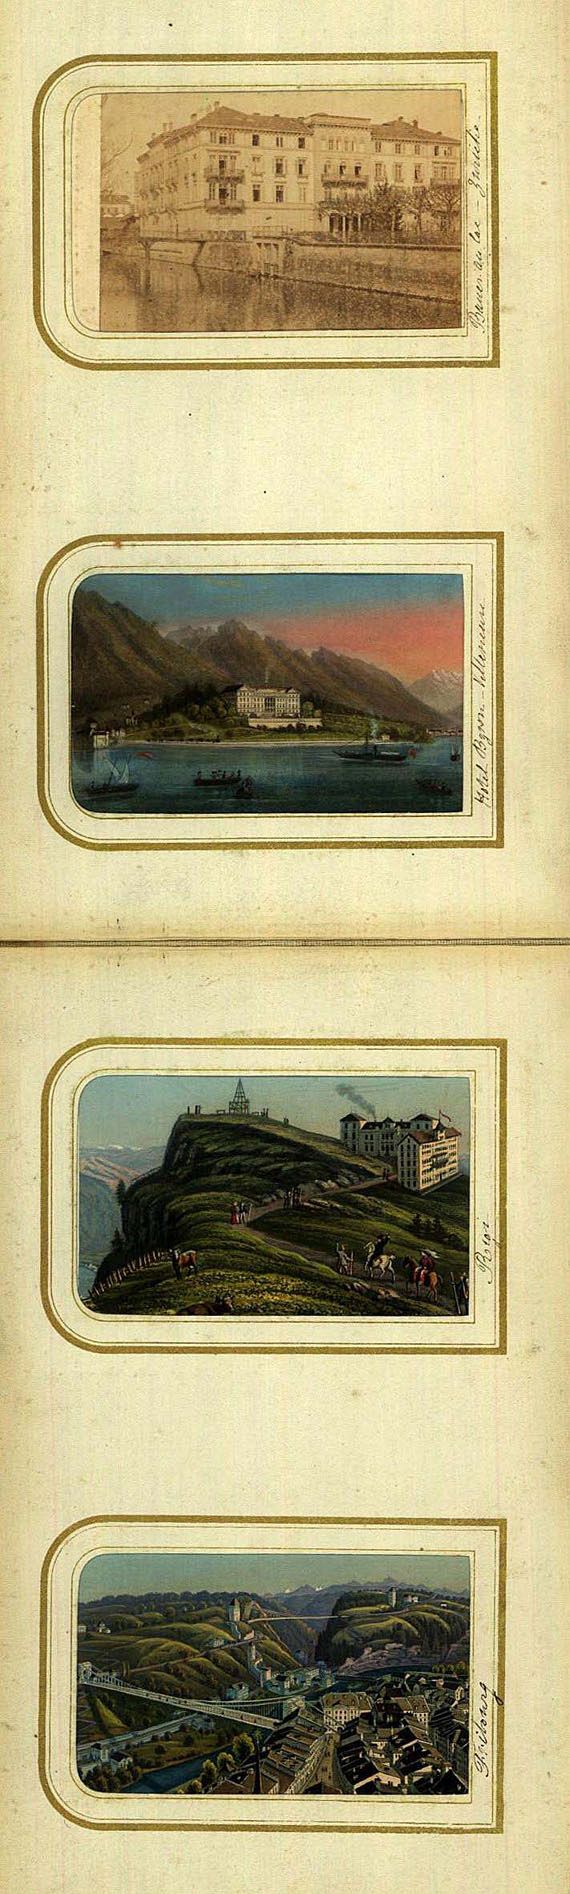  Fotografie - Album Fotografien/Aquatinten Schweiz u. Italien. Um 1870-80.